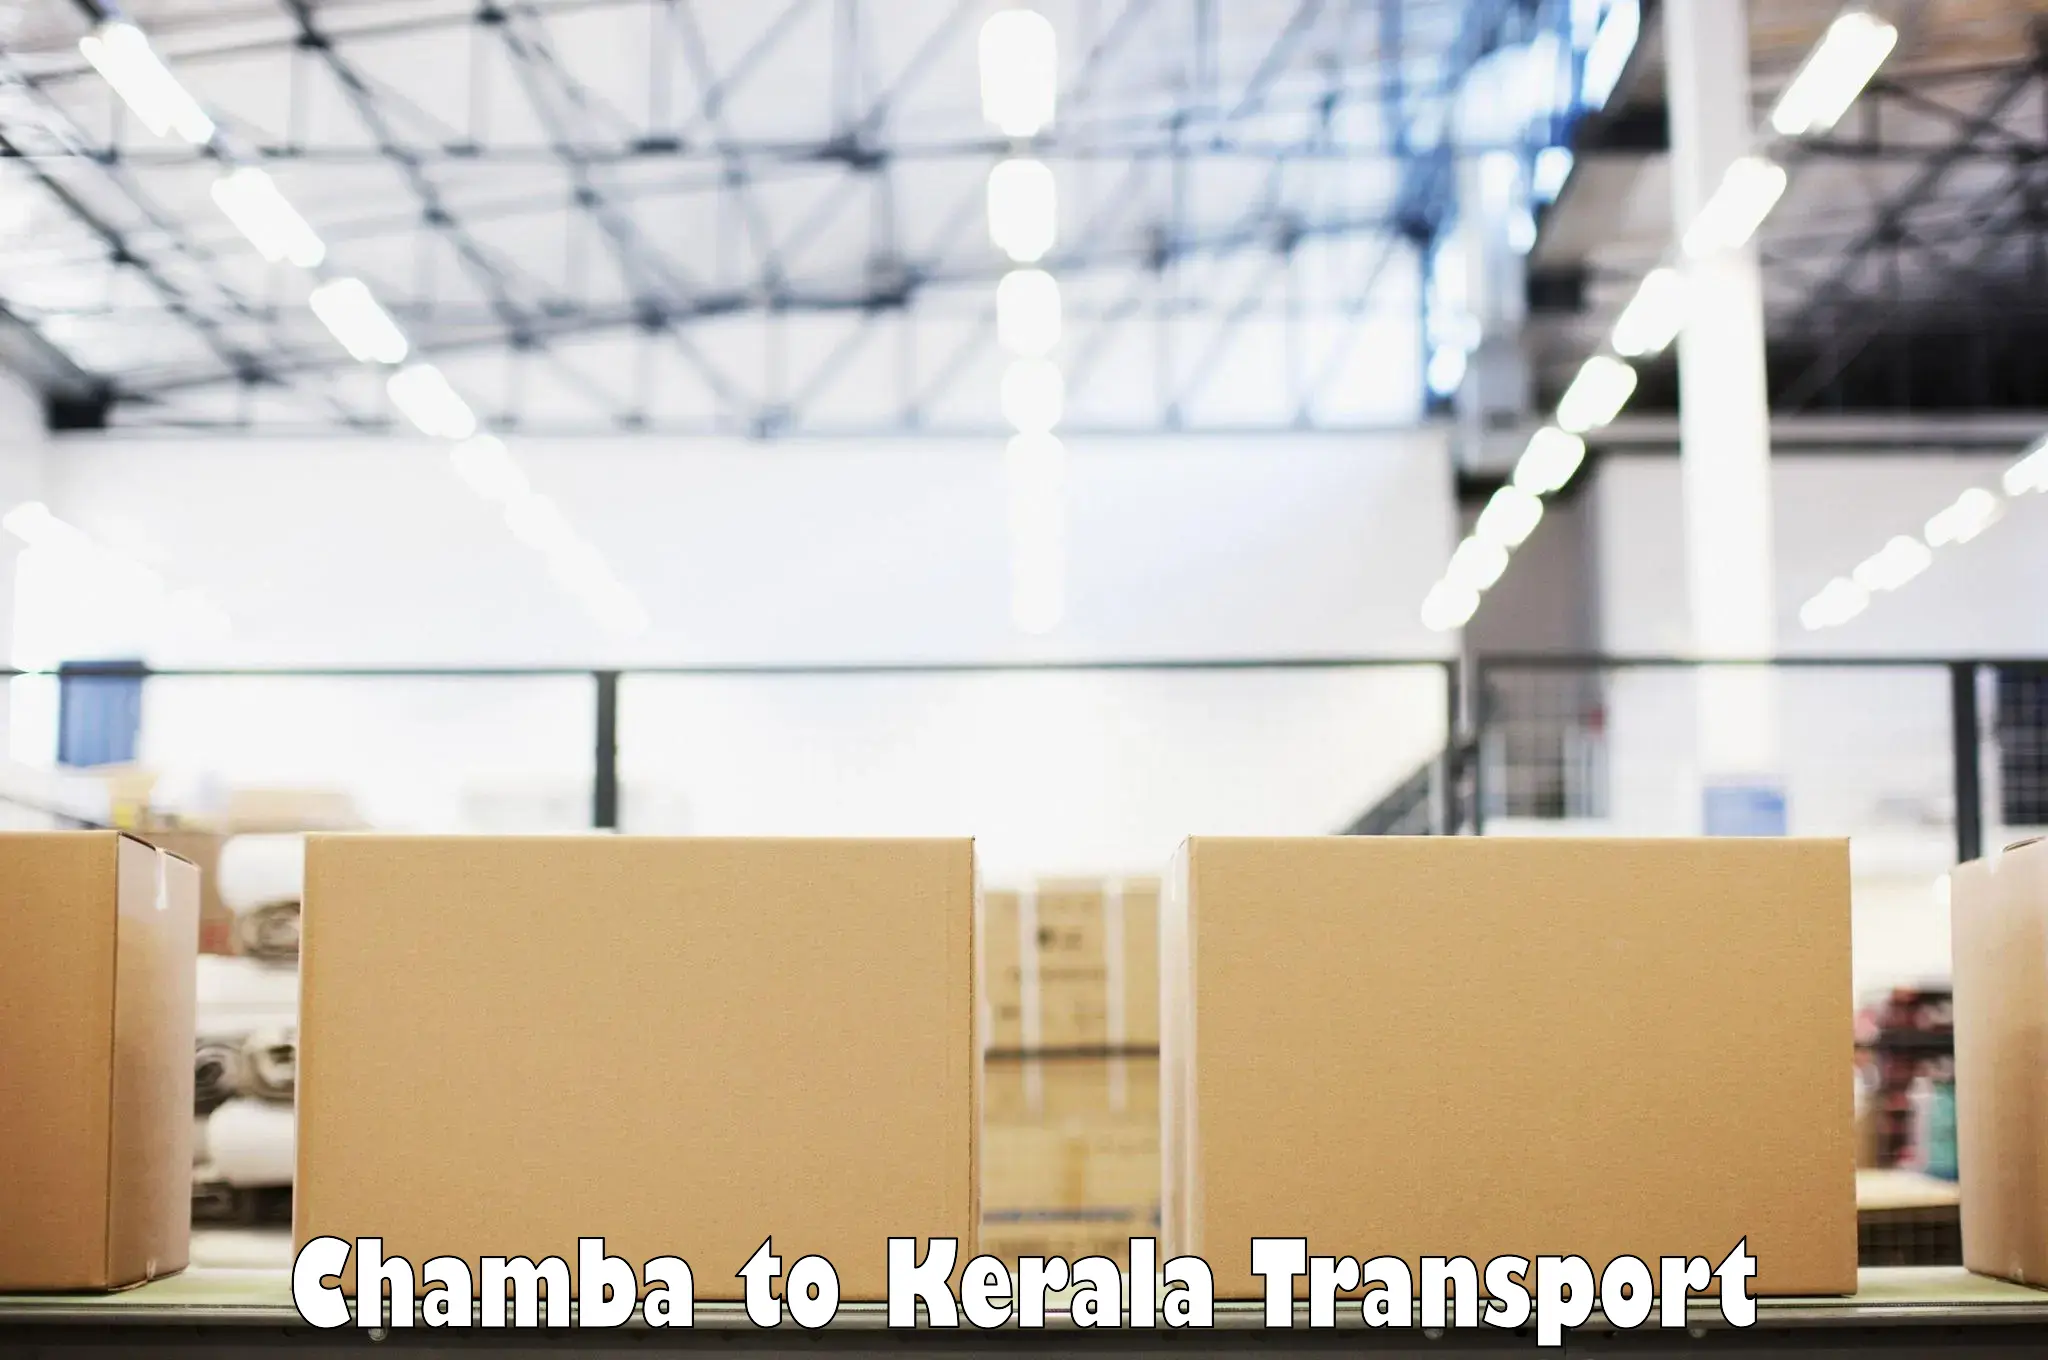 Nearby transport service Chamba to Cochin Port Kochi